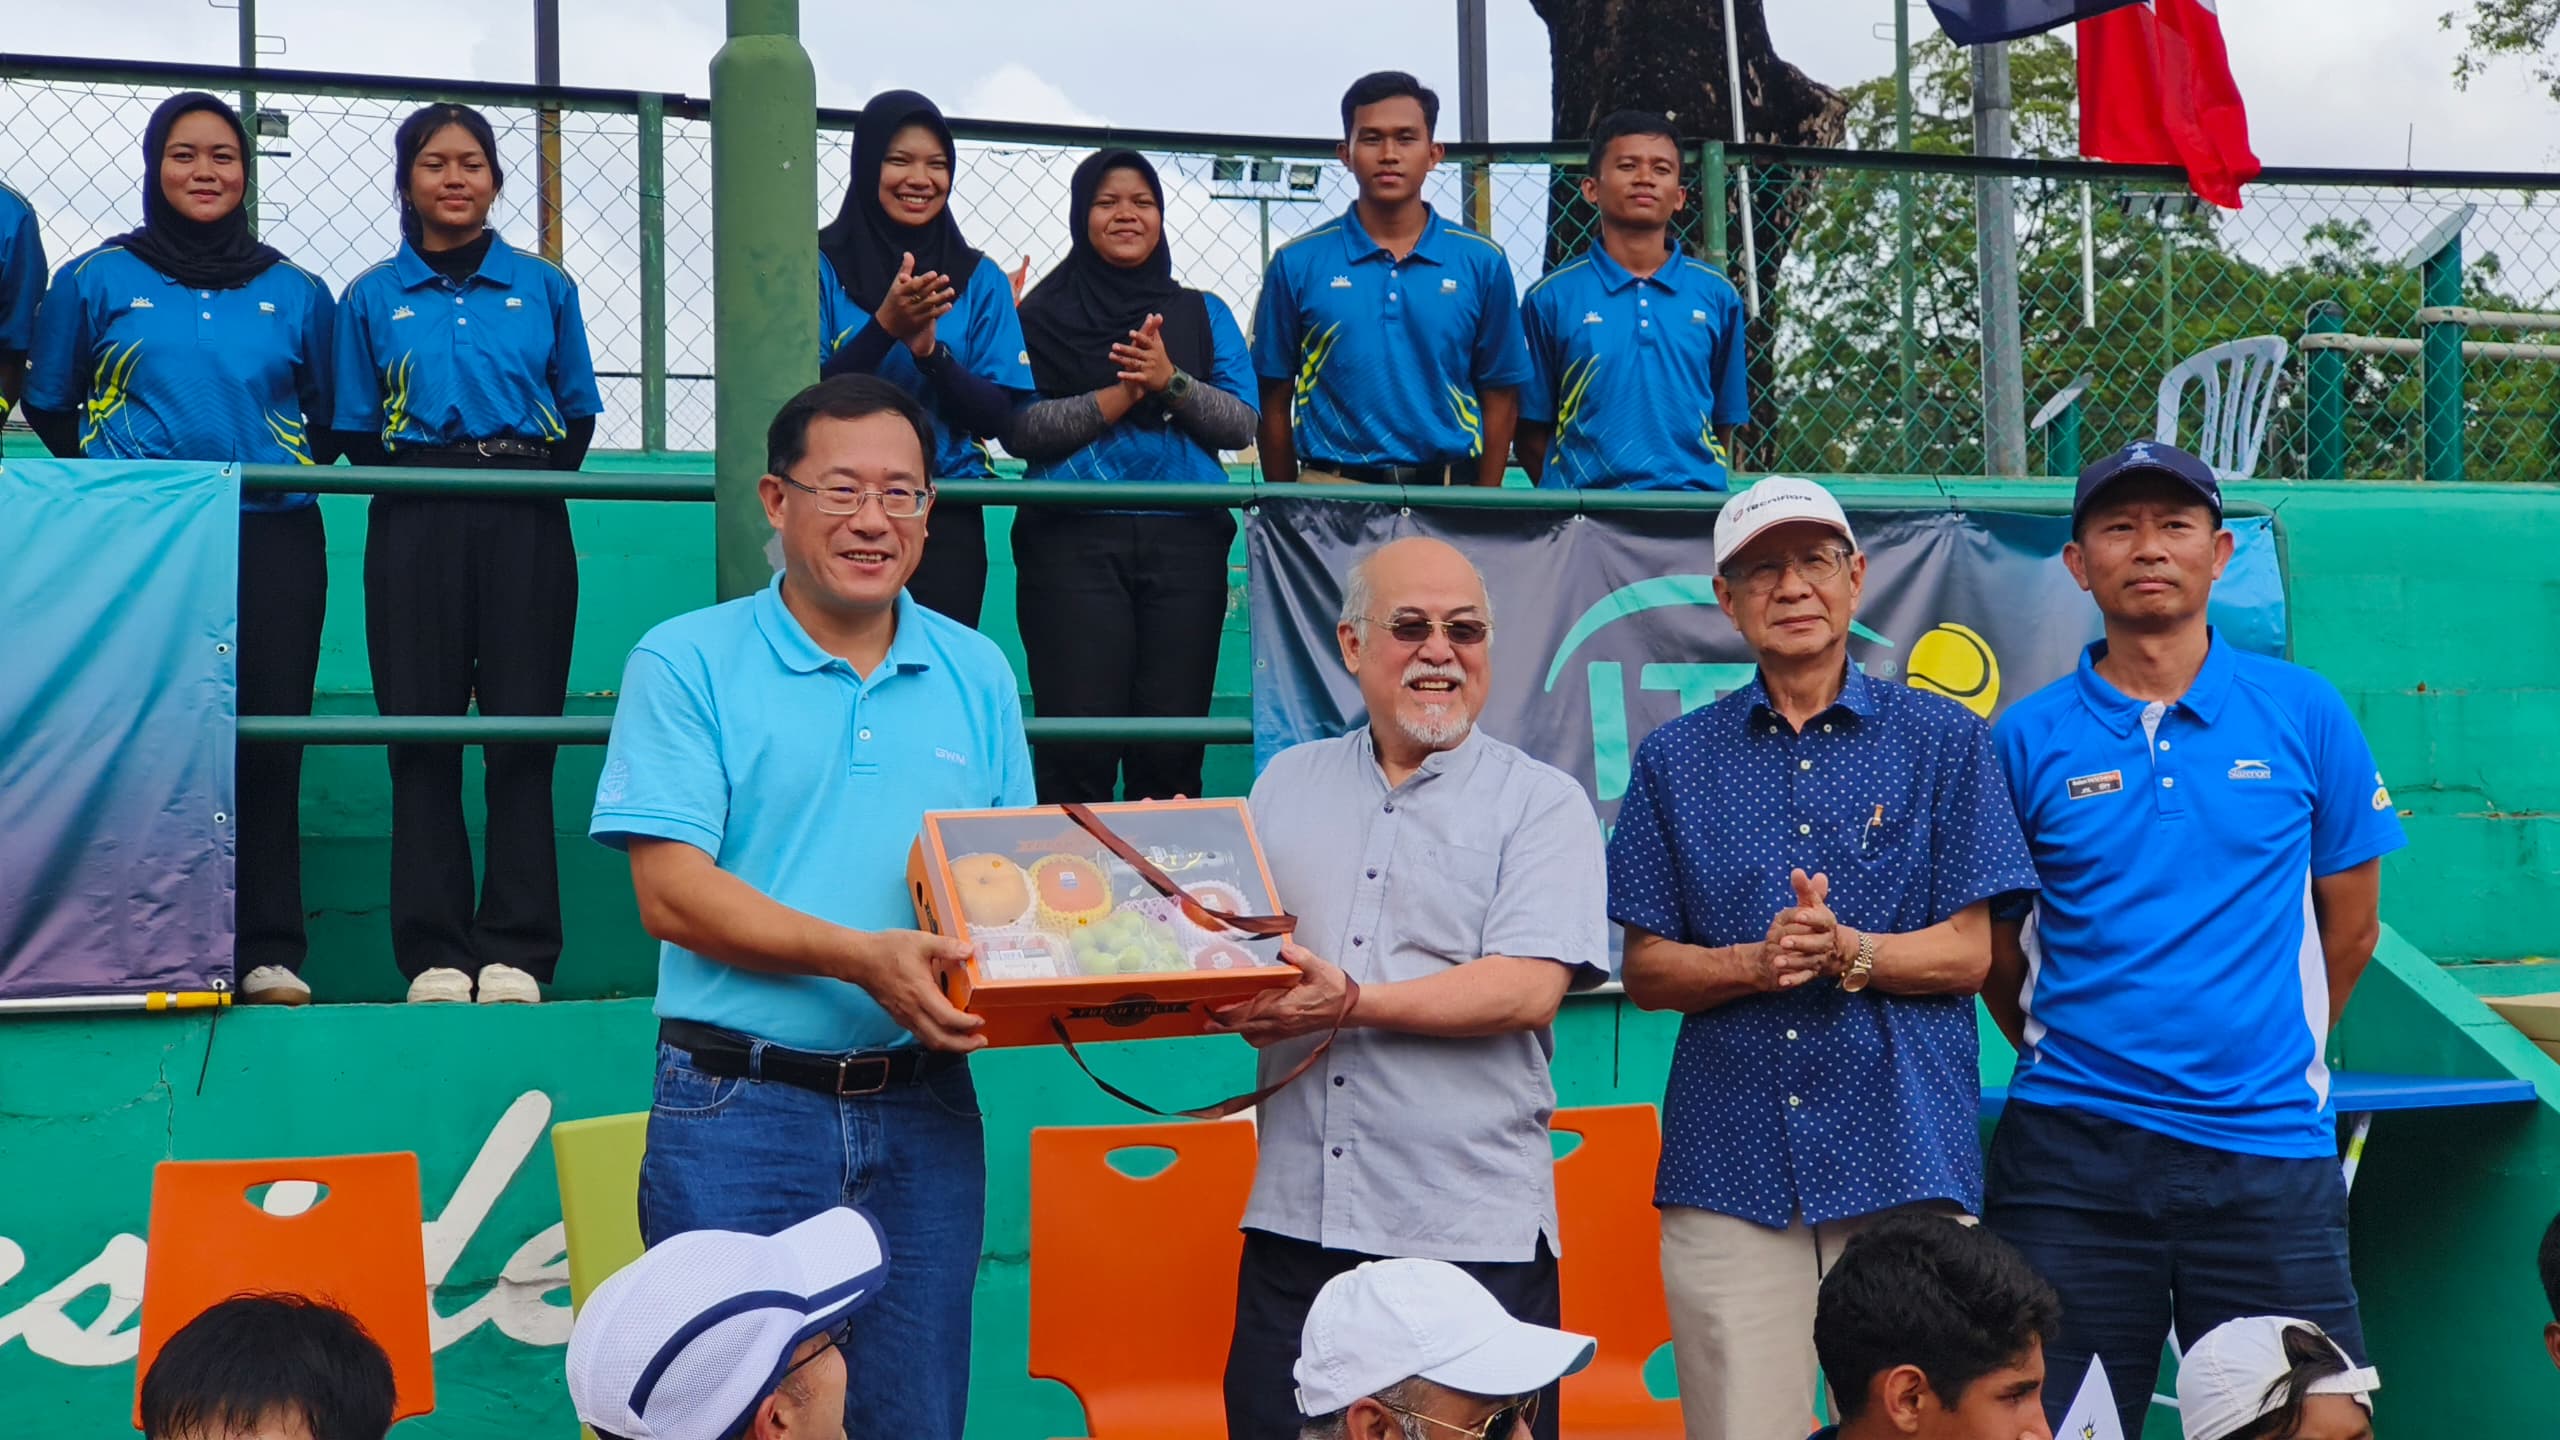 Sarawak tennis association hosts over 130 international events since 2000